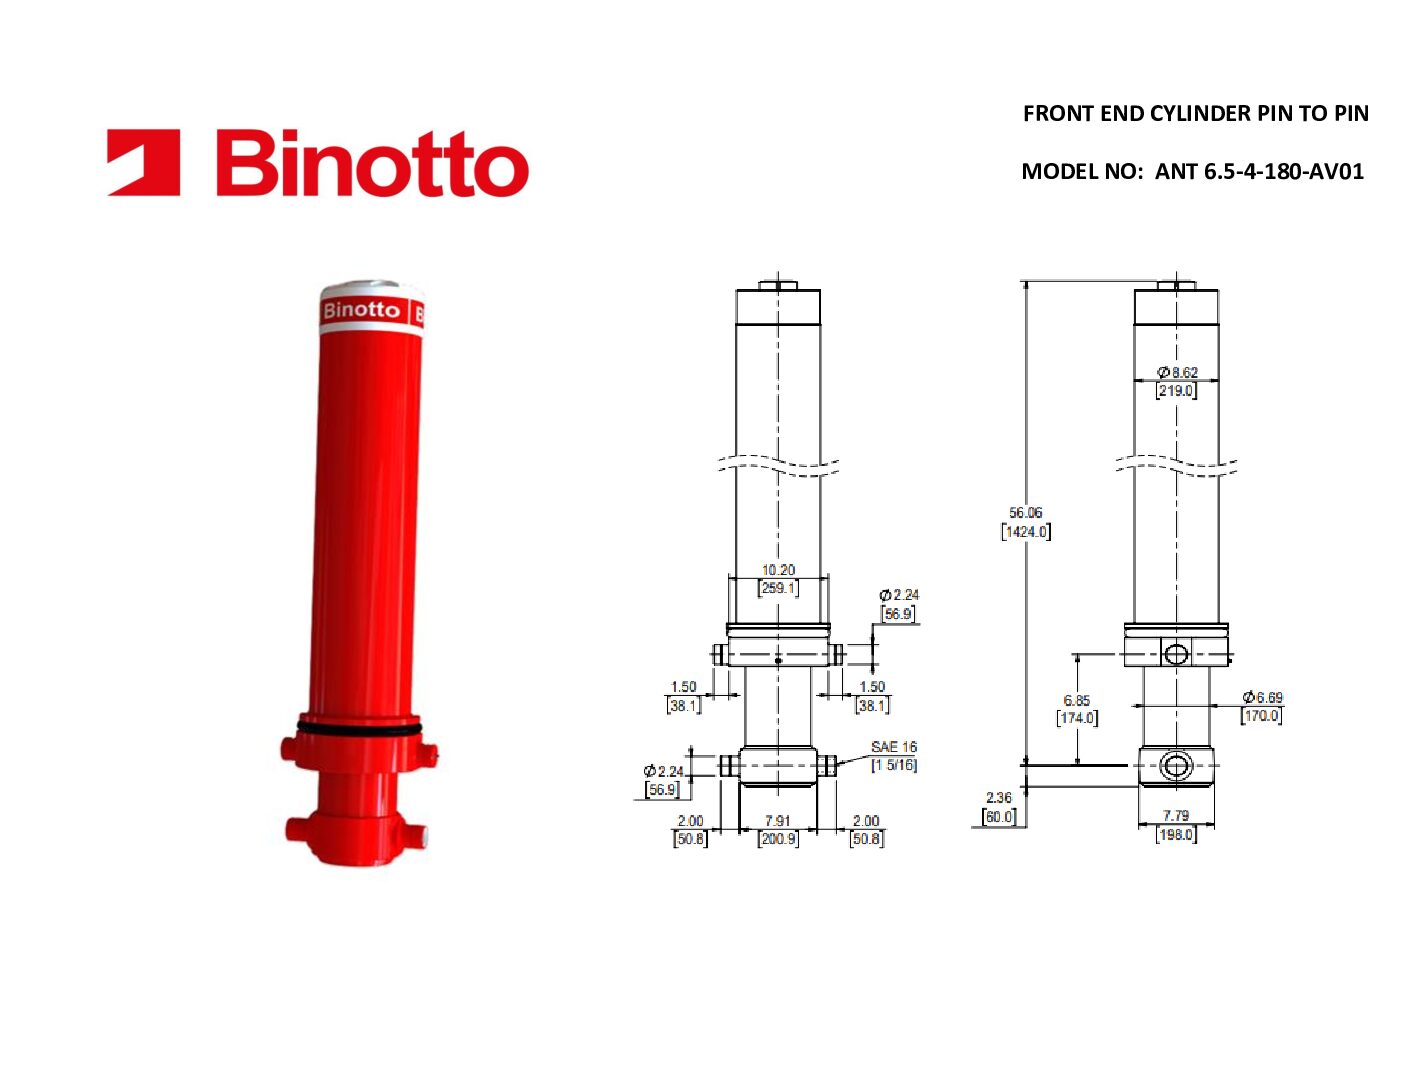 6.5-4-180-AV01 Binotto SAT Telescopic Cylinder